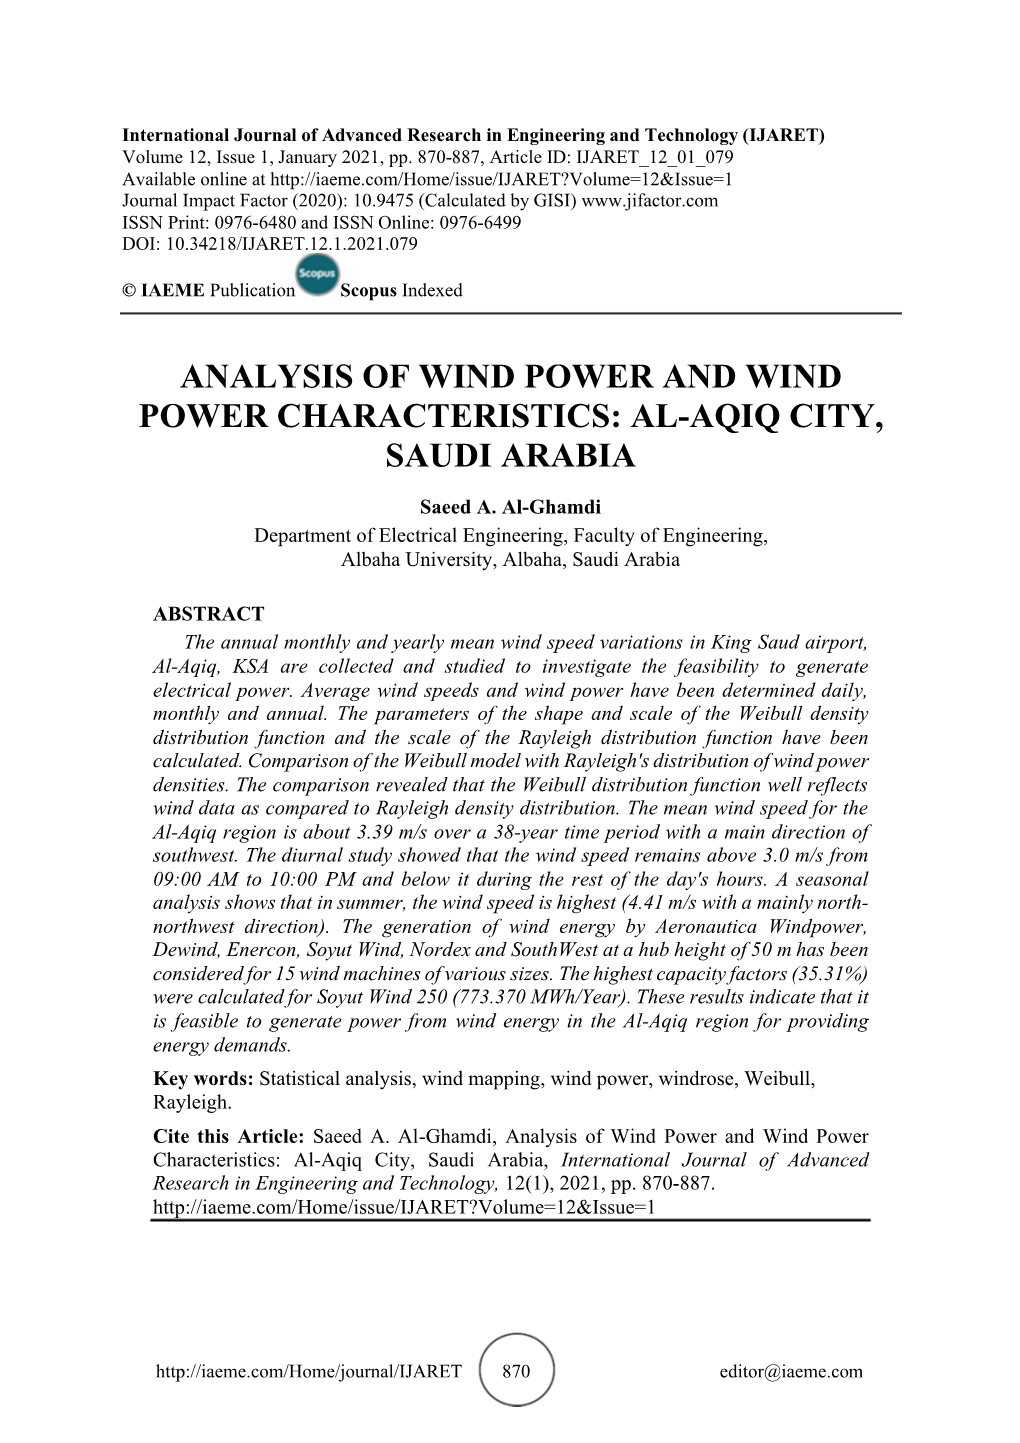 Analysis of Wind Power and Wind Power Characteristics: Al-Aqiq City, Saudi Arabia